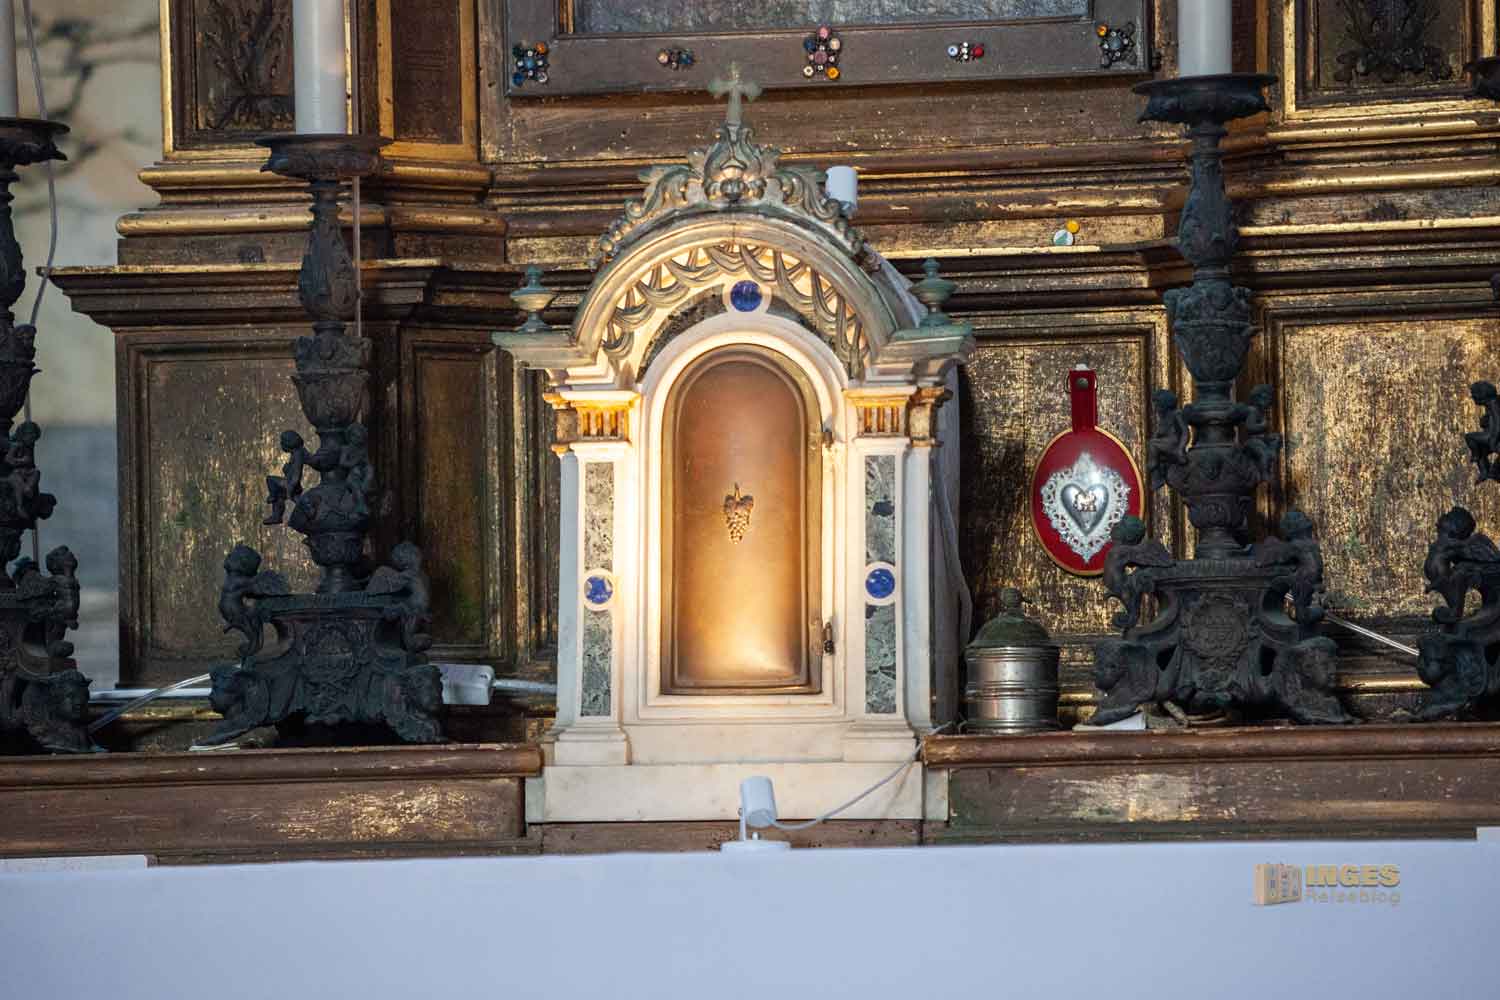 hauptaltar kirche santa maria dei miracoli venedig 0233